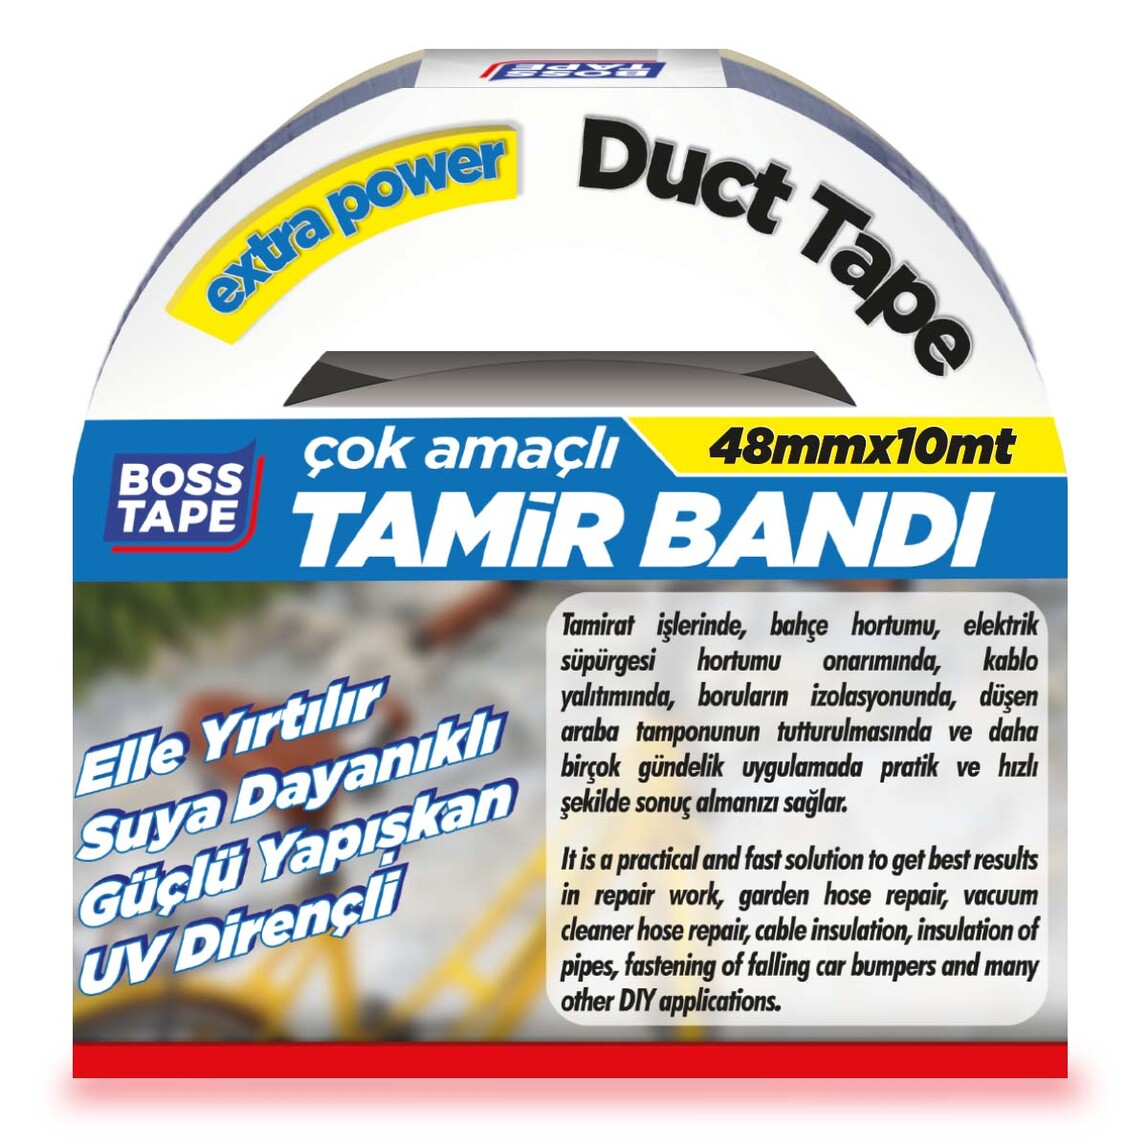    Boss Tape Siyah Duck Tape Tamir Bandı  